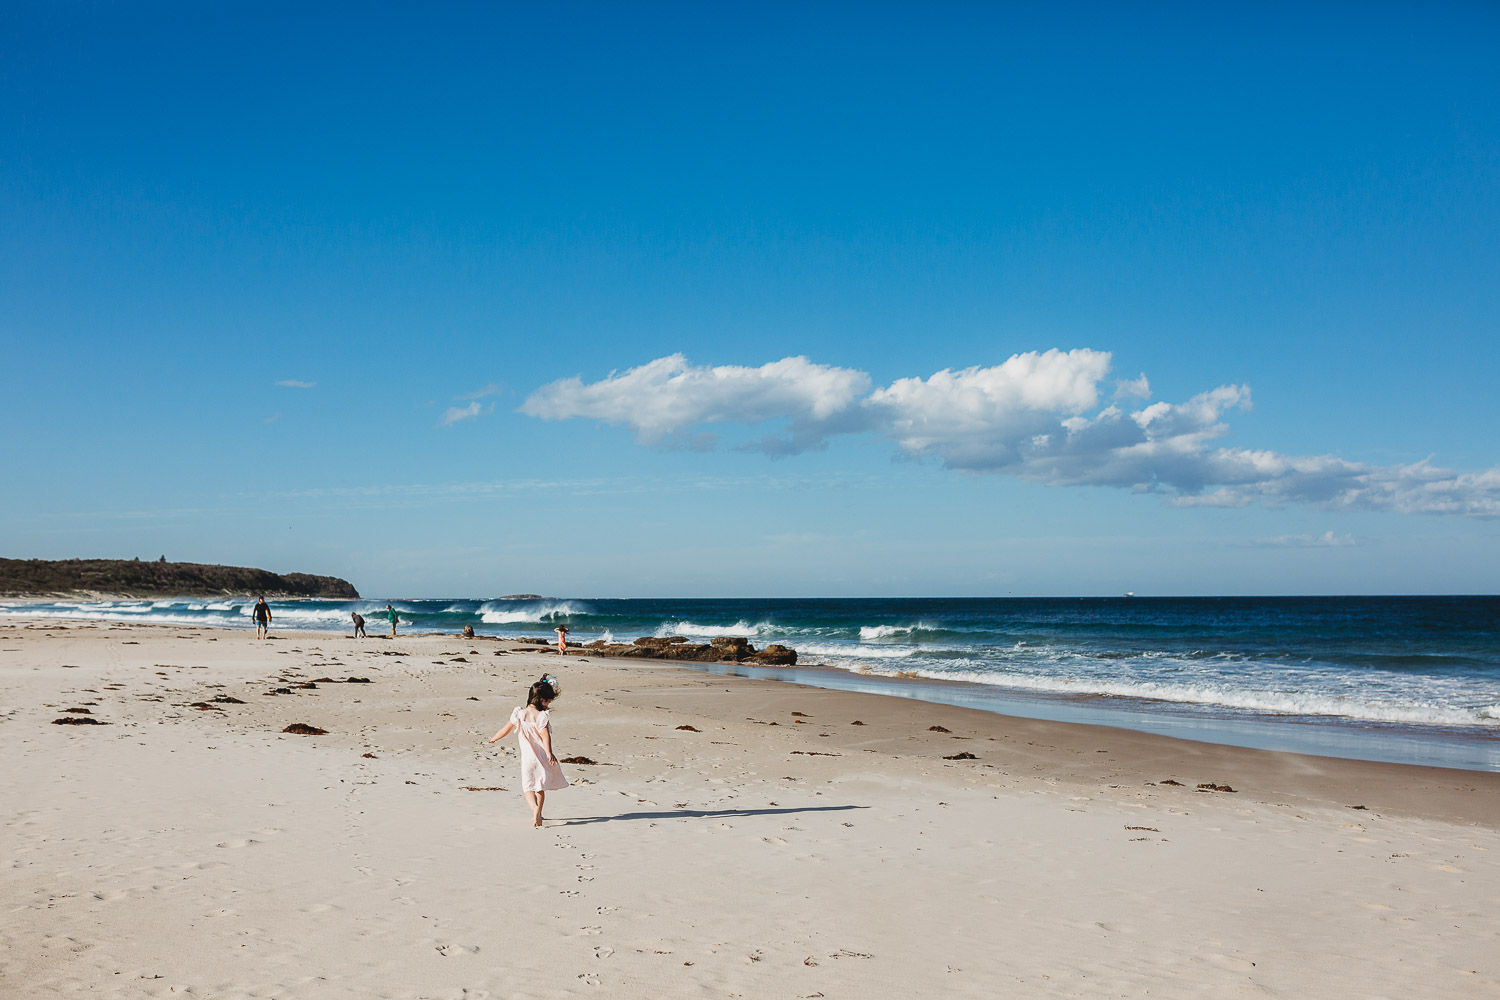 Young girl walking on the beach toward water